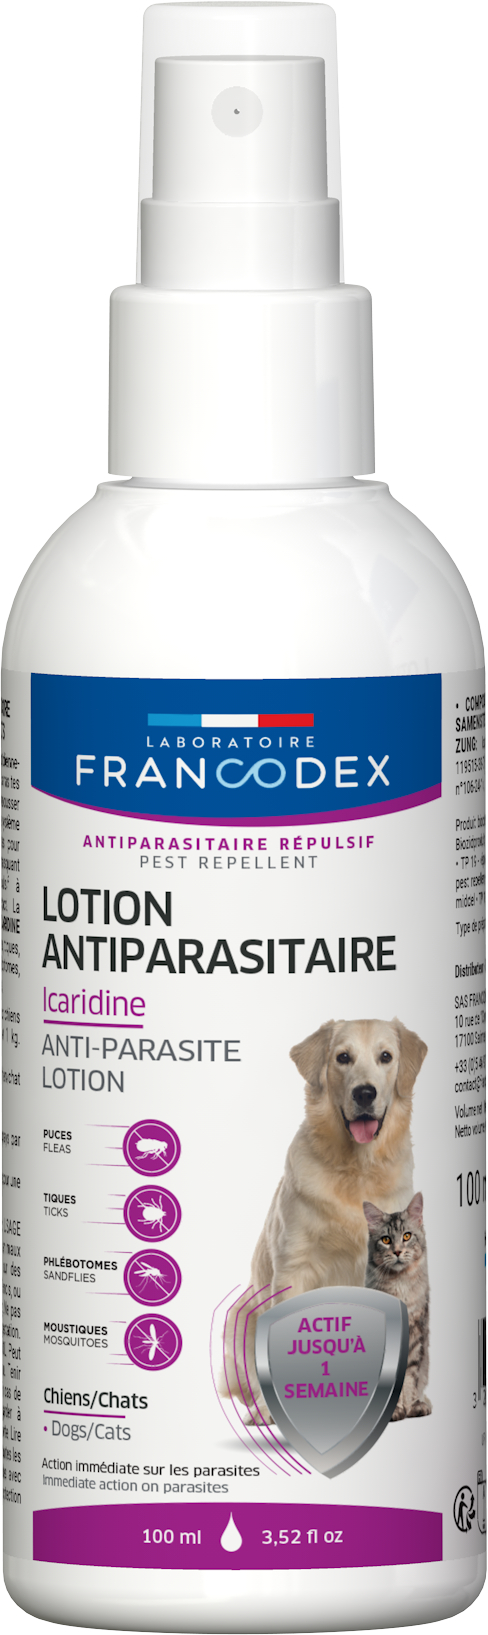 Francodex Icaridin Lotion für Hunde und Katzen